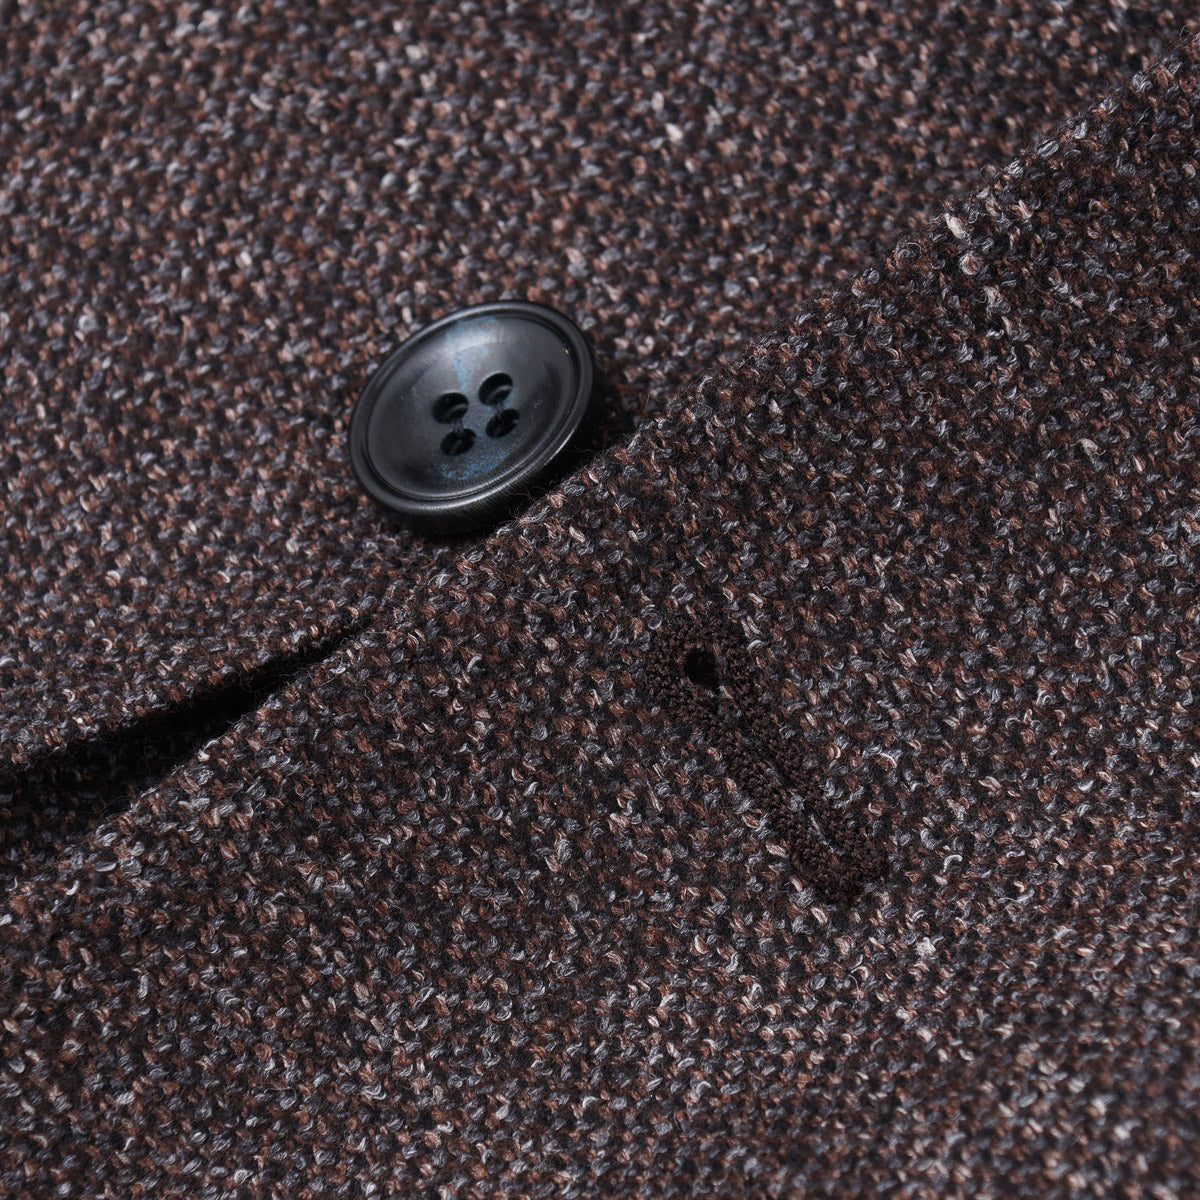 Sartorio Mélange Wool-Silk-Linen Sport Coat - Top Shelf Apparel